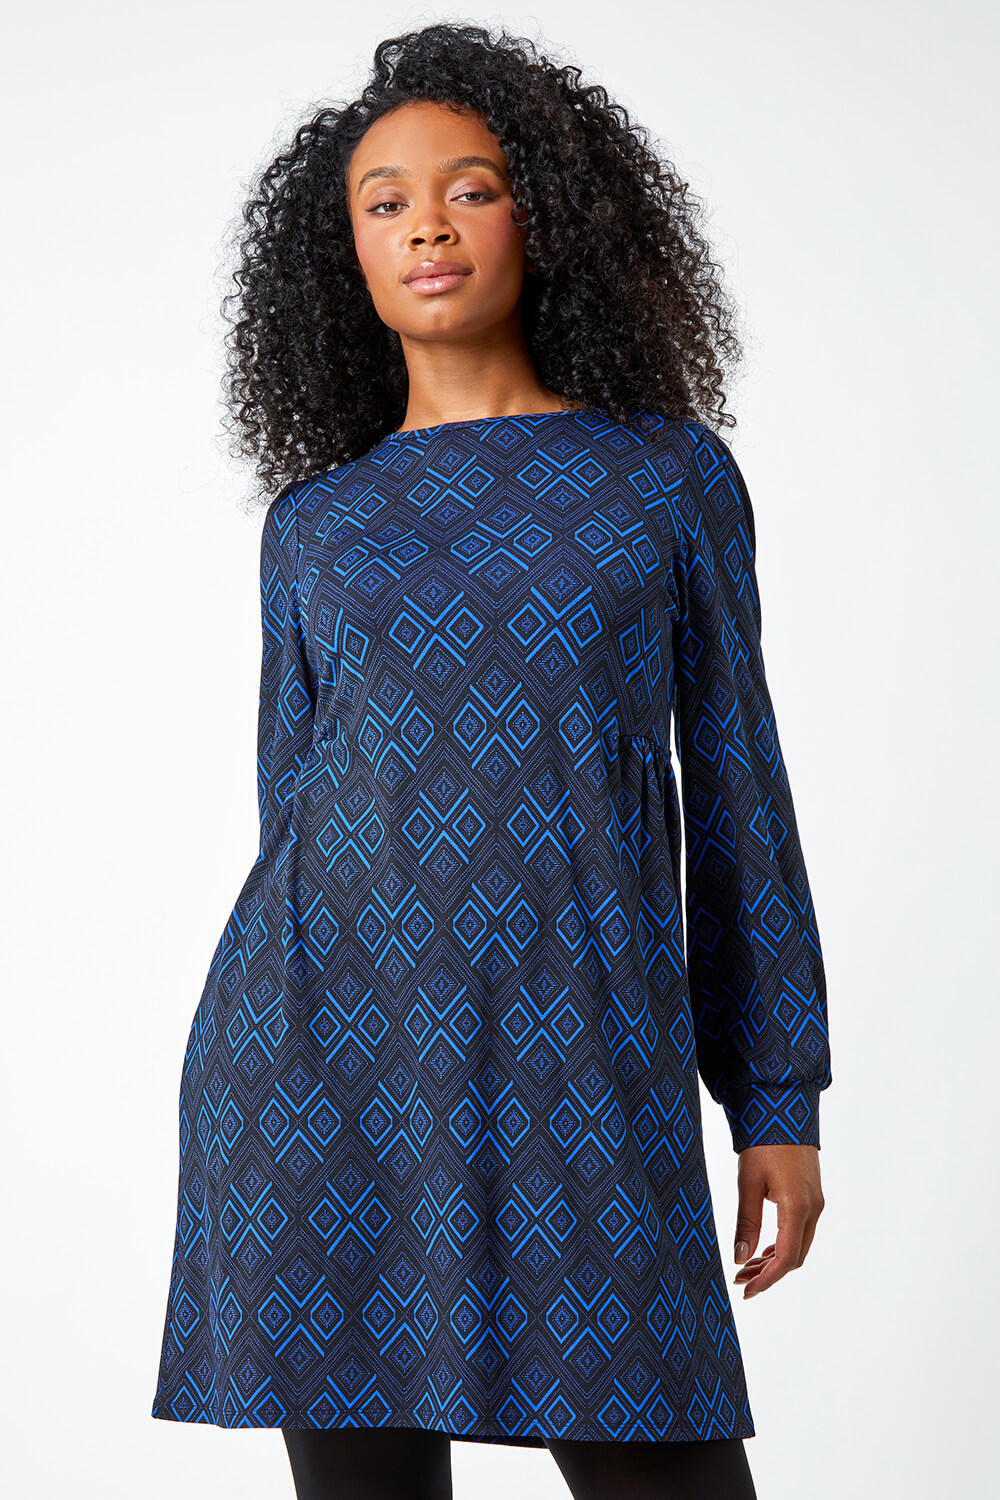 Royal Blue Petite Aztec Print Stretch Dress, Image 2 of 5